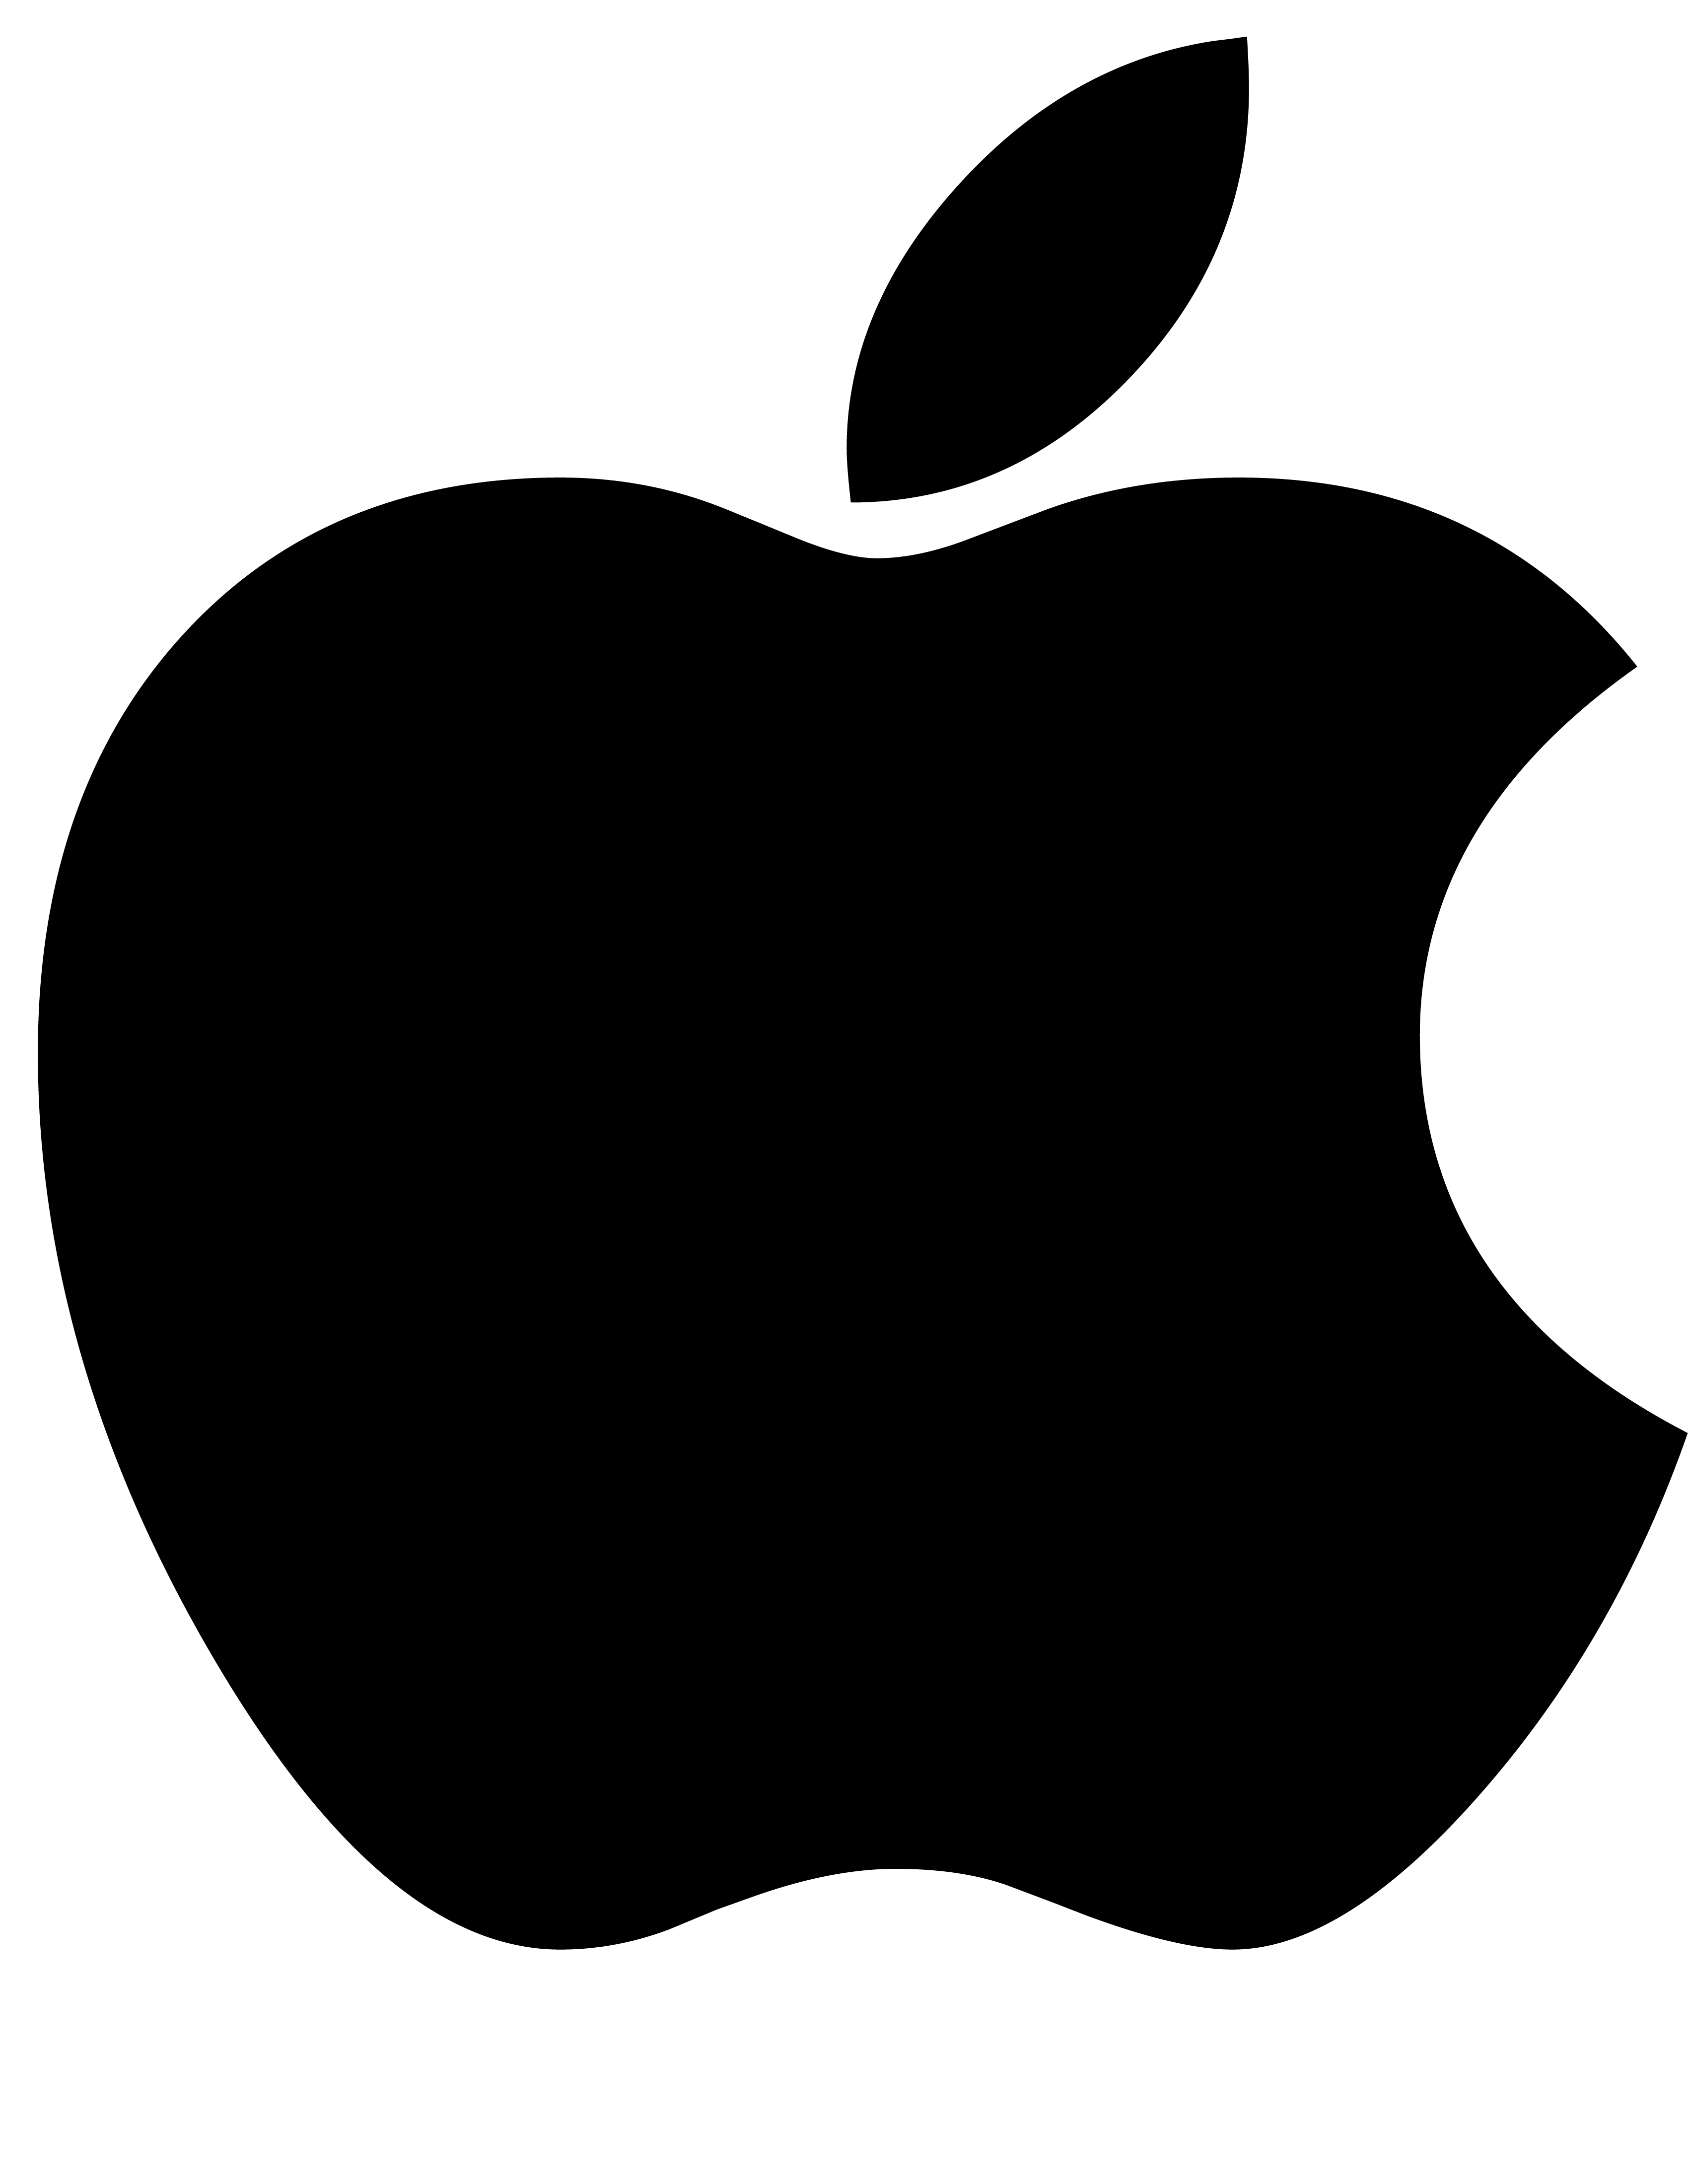 giant-apple-logo-bw.png